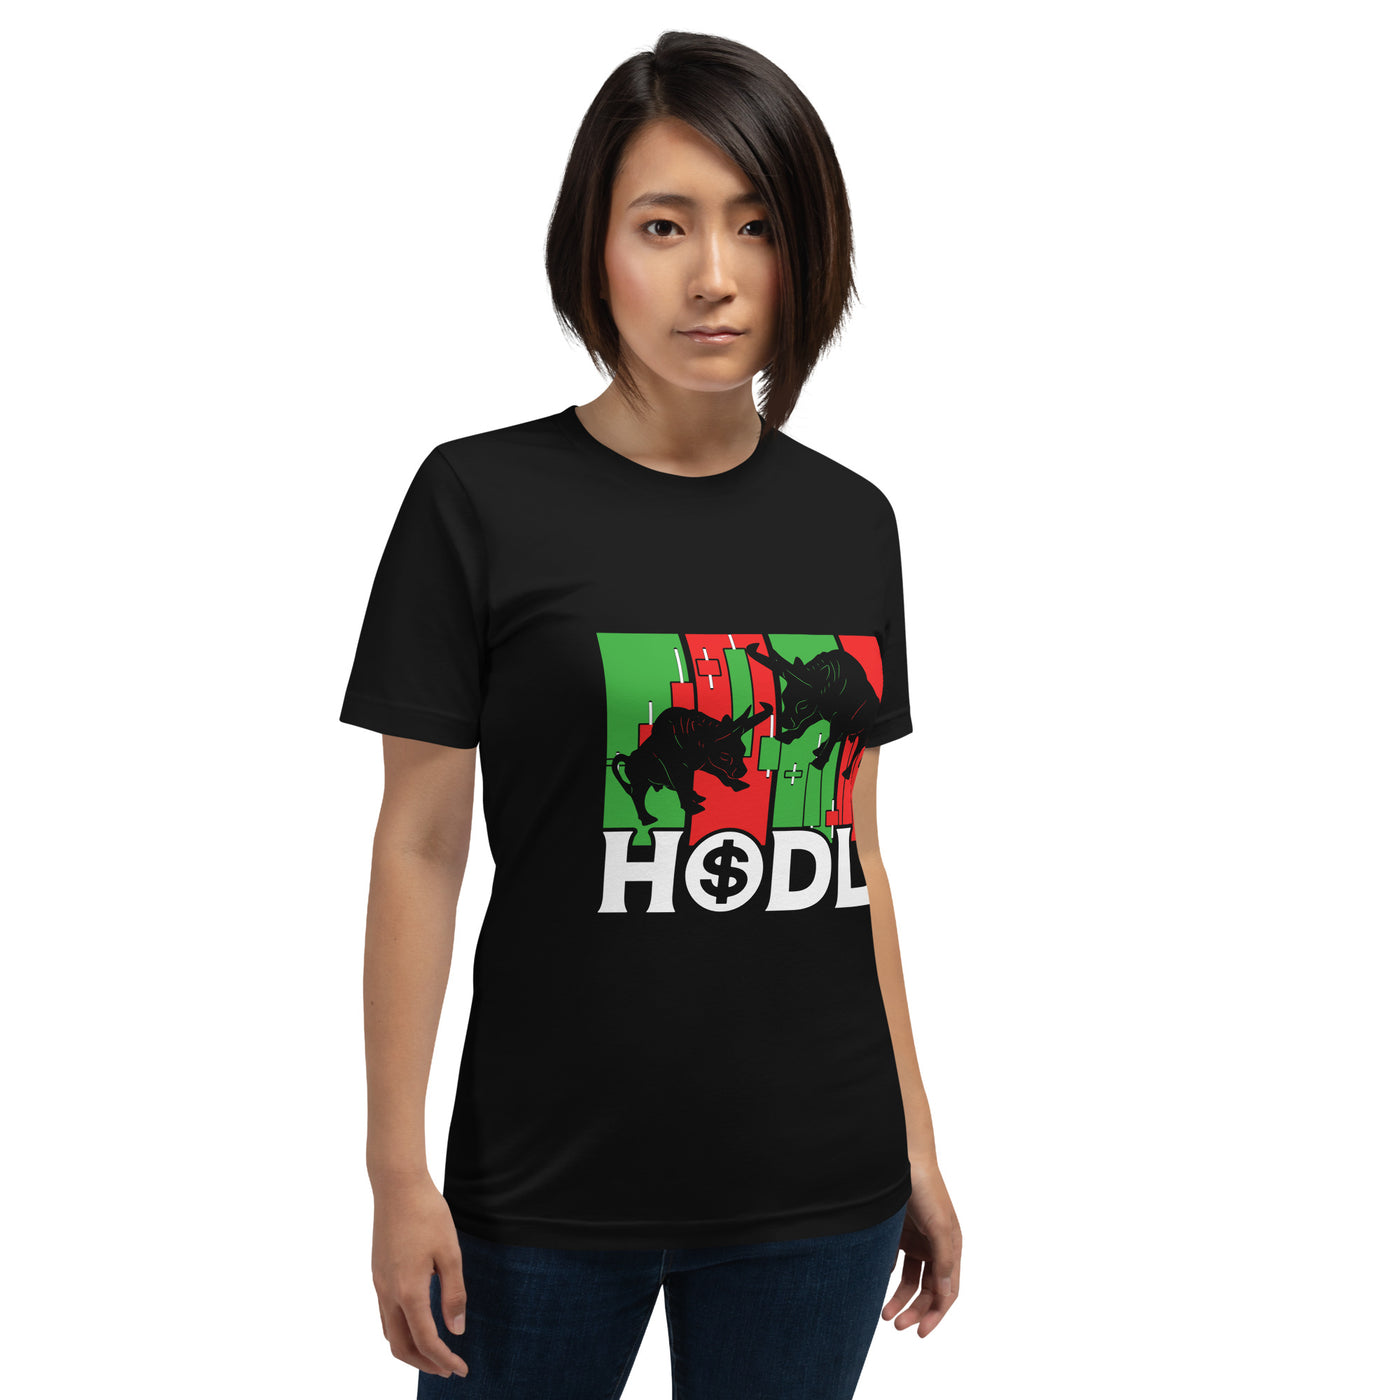 HODL - Unisex t-shirt